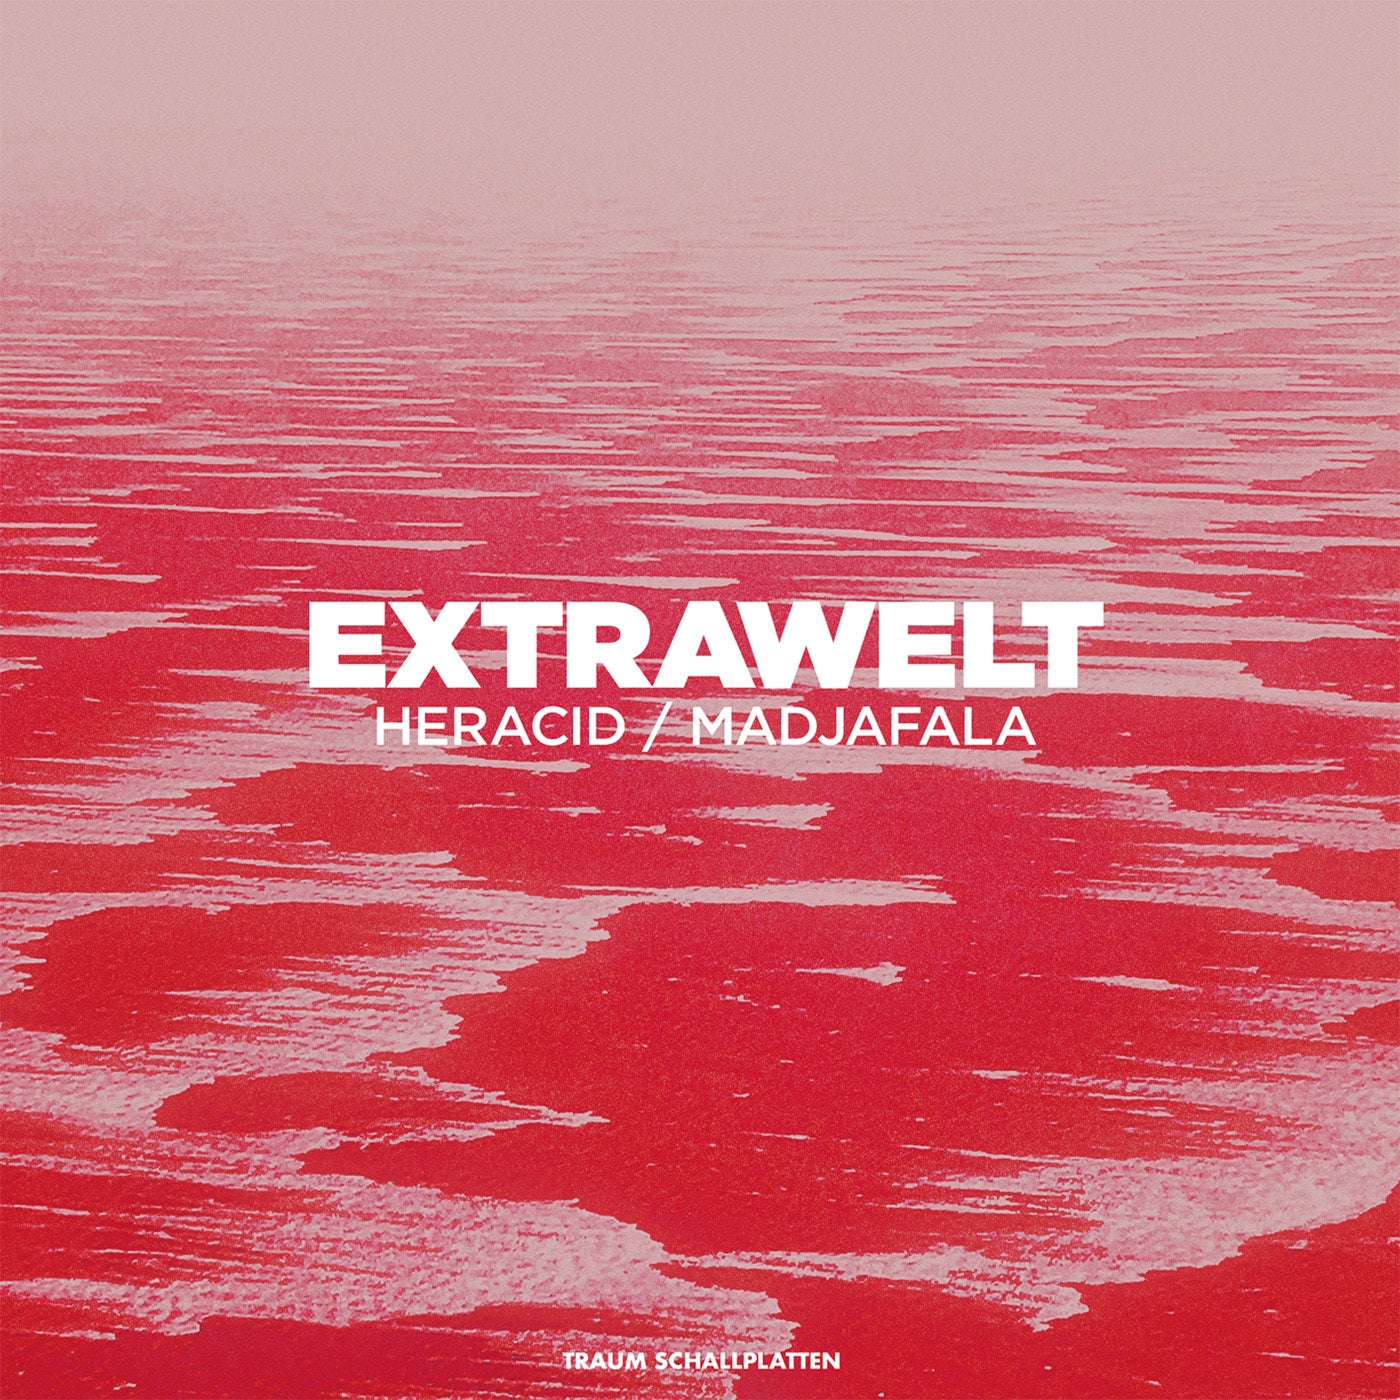 image cover: Extrawelt - Heracid / Madjafala / TRAUMV251